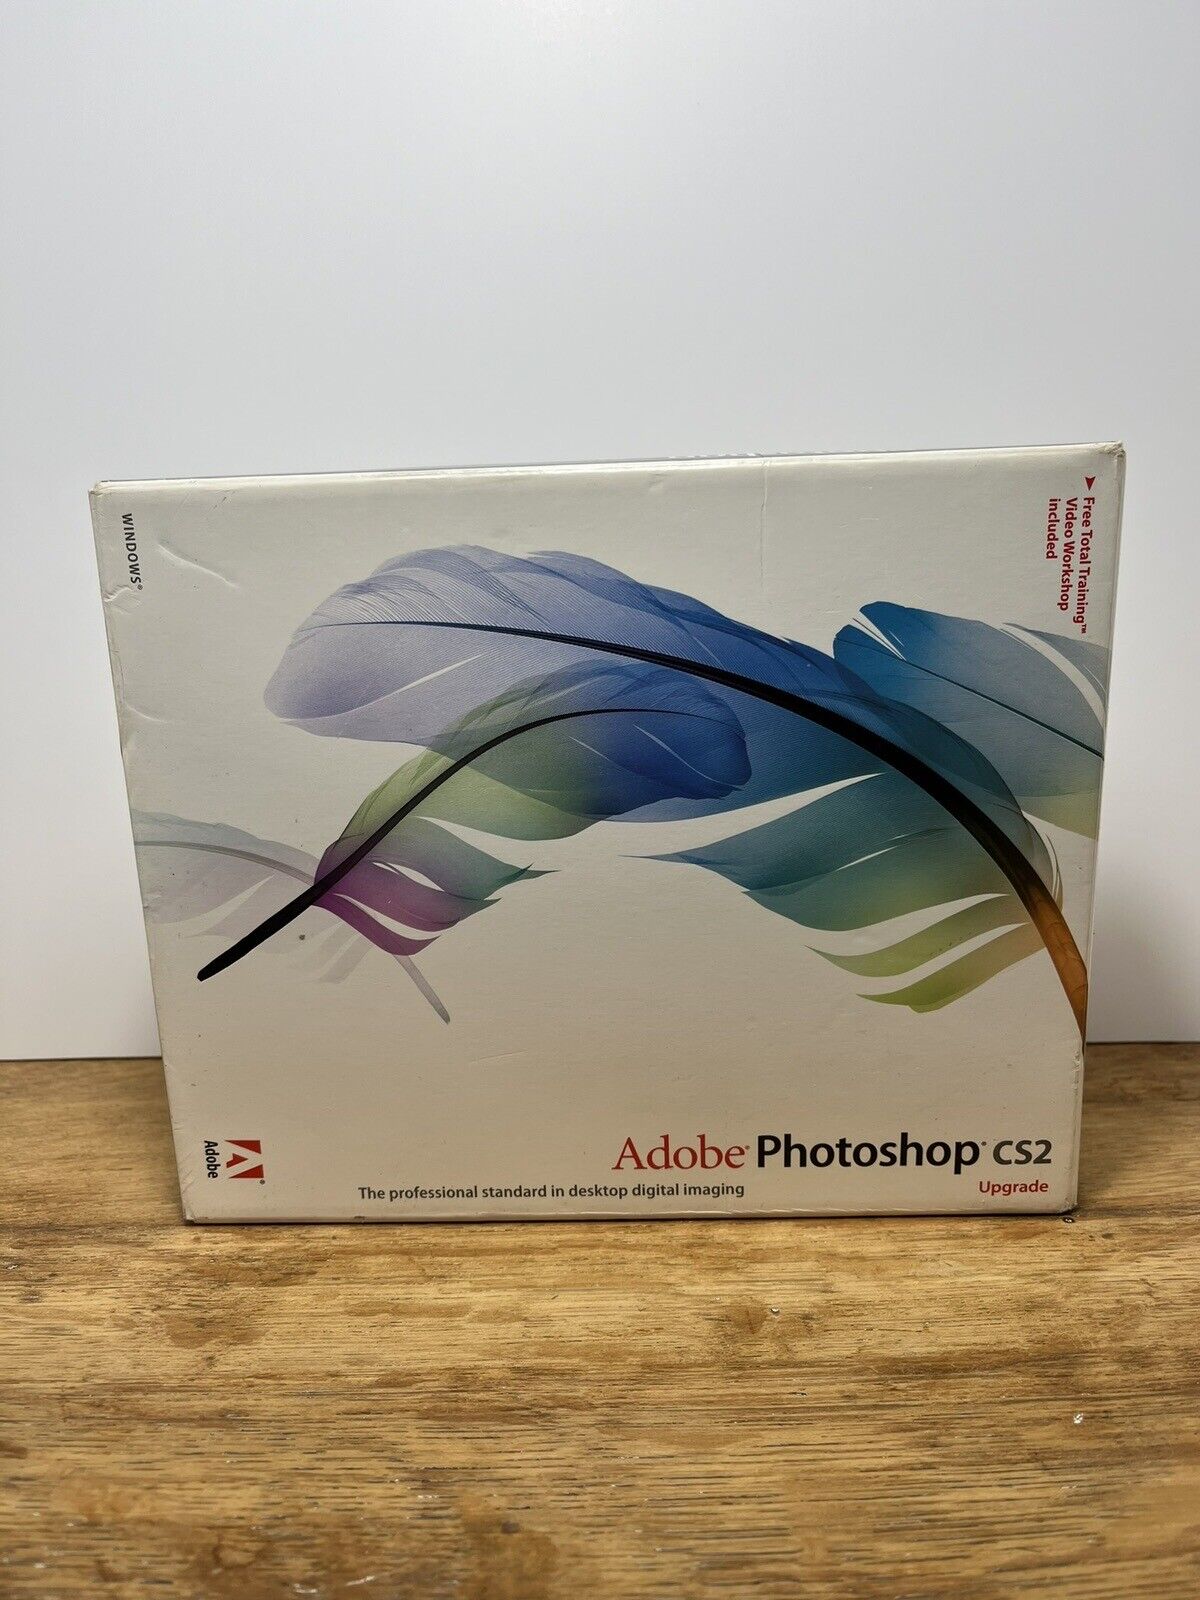 Adobe PhotoShop CS2 Upgrade/Macintosh - 2 CD Set w/Training Video/ Serial Number